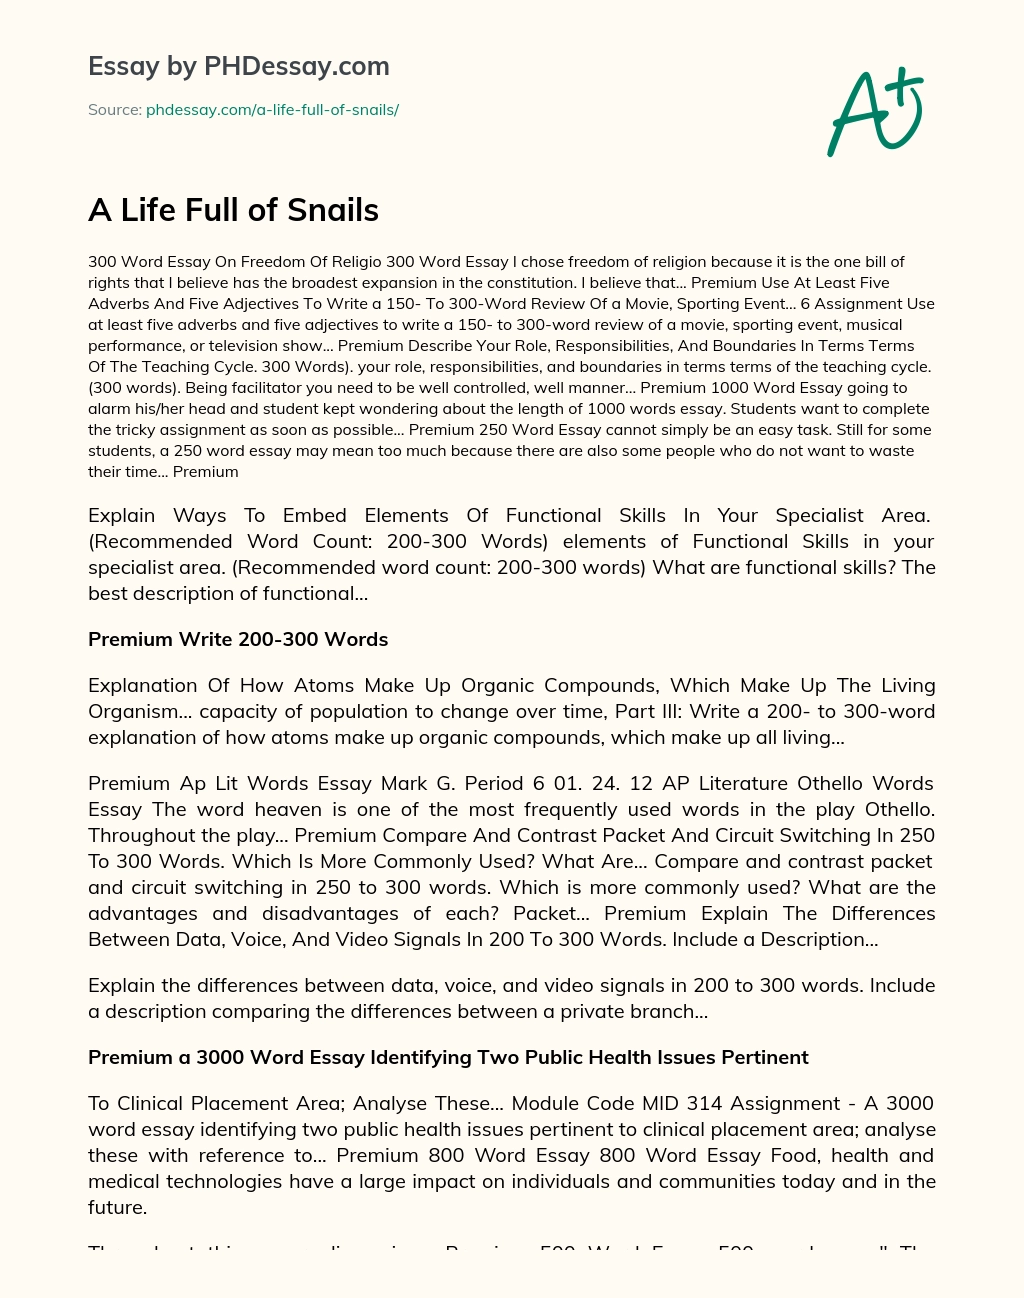 A Life Full of Snails essay